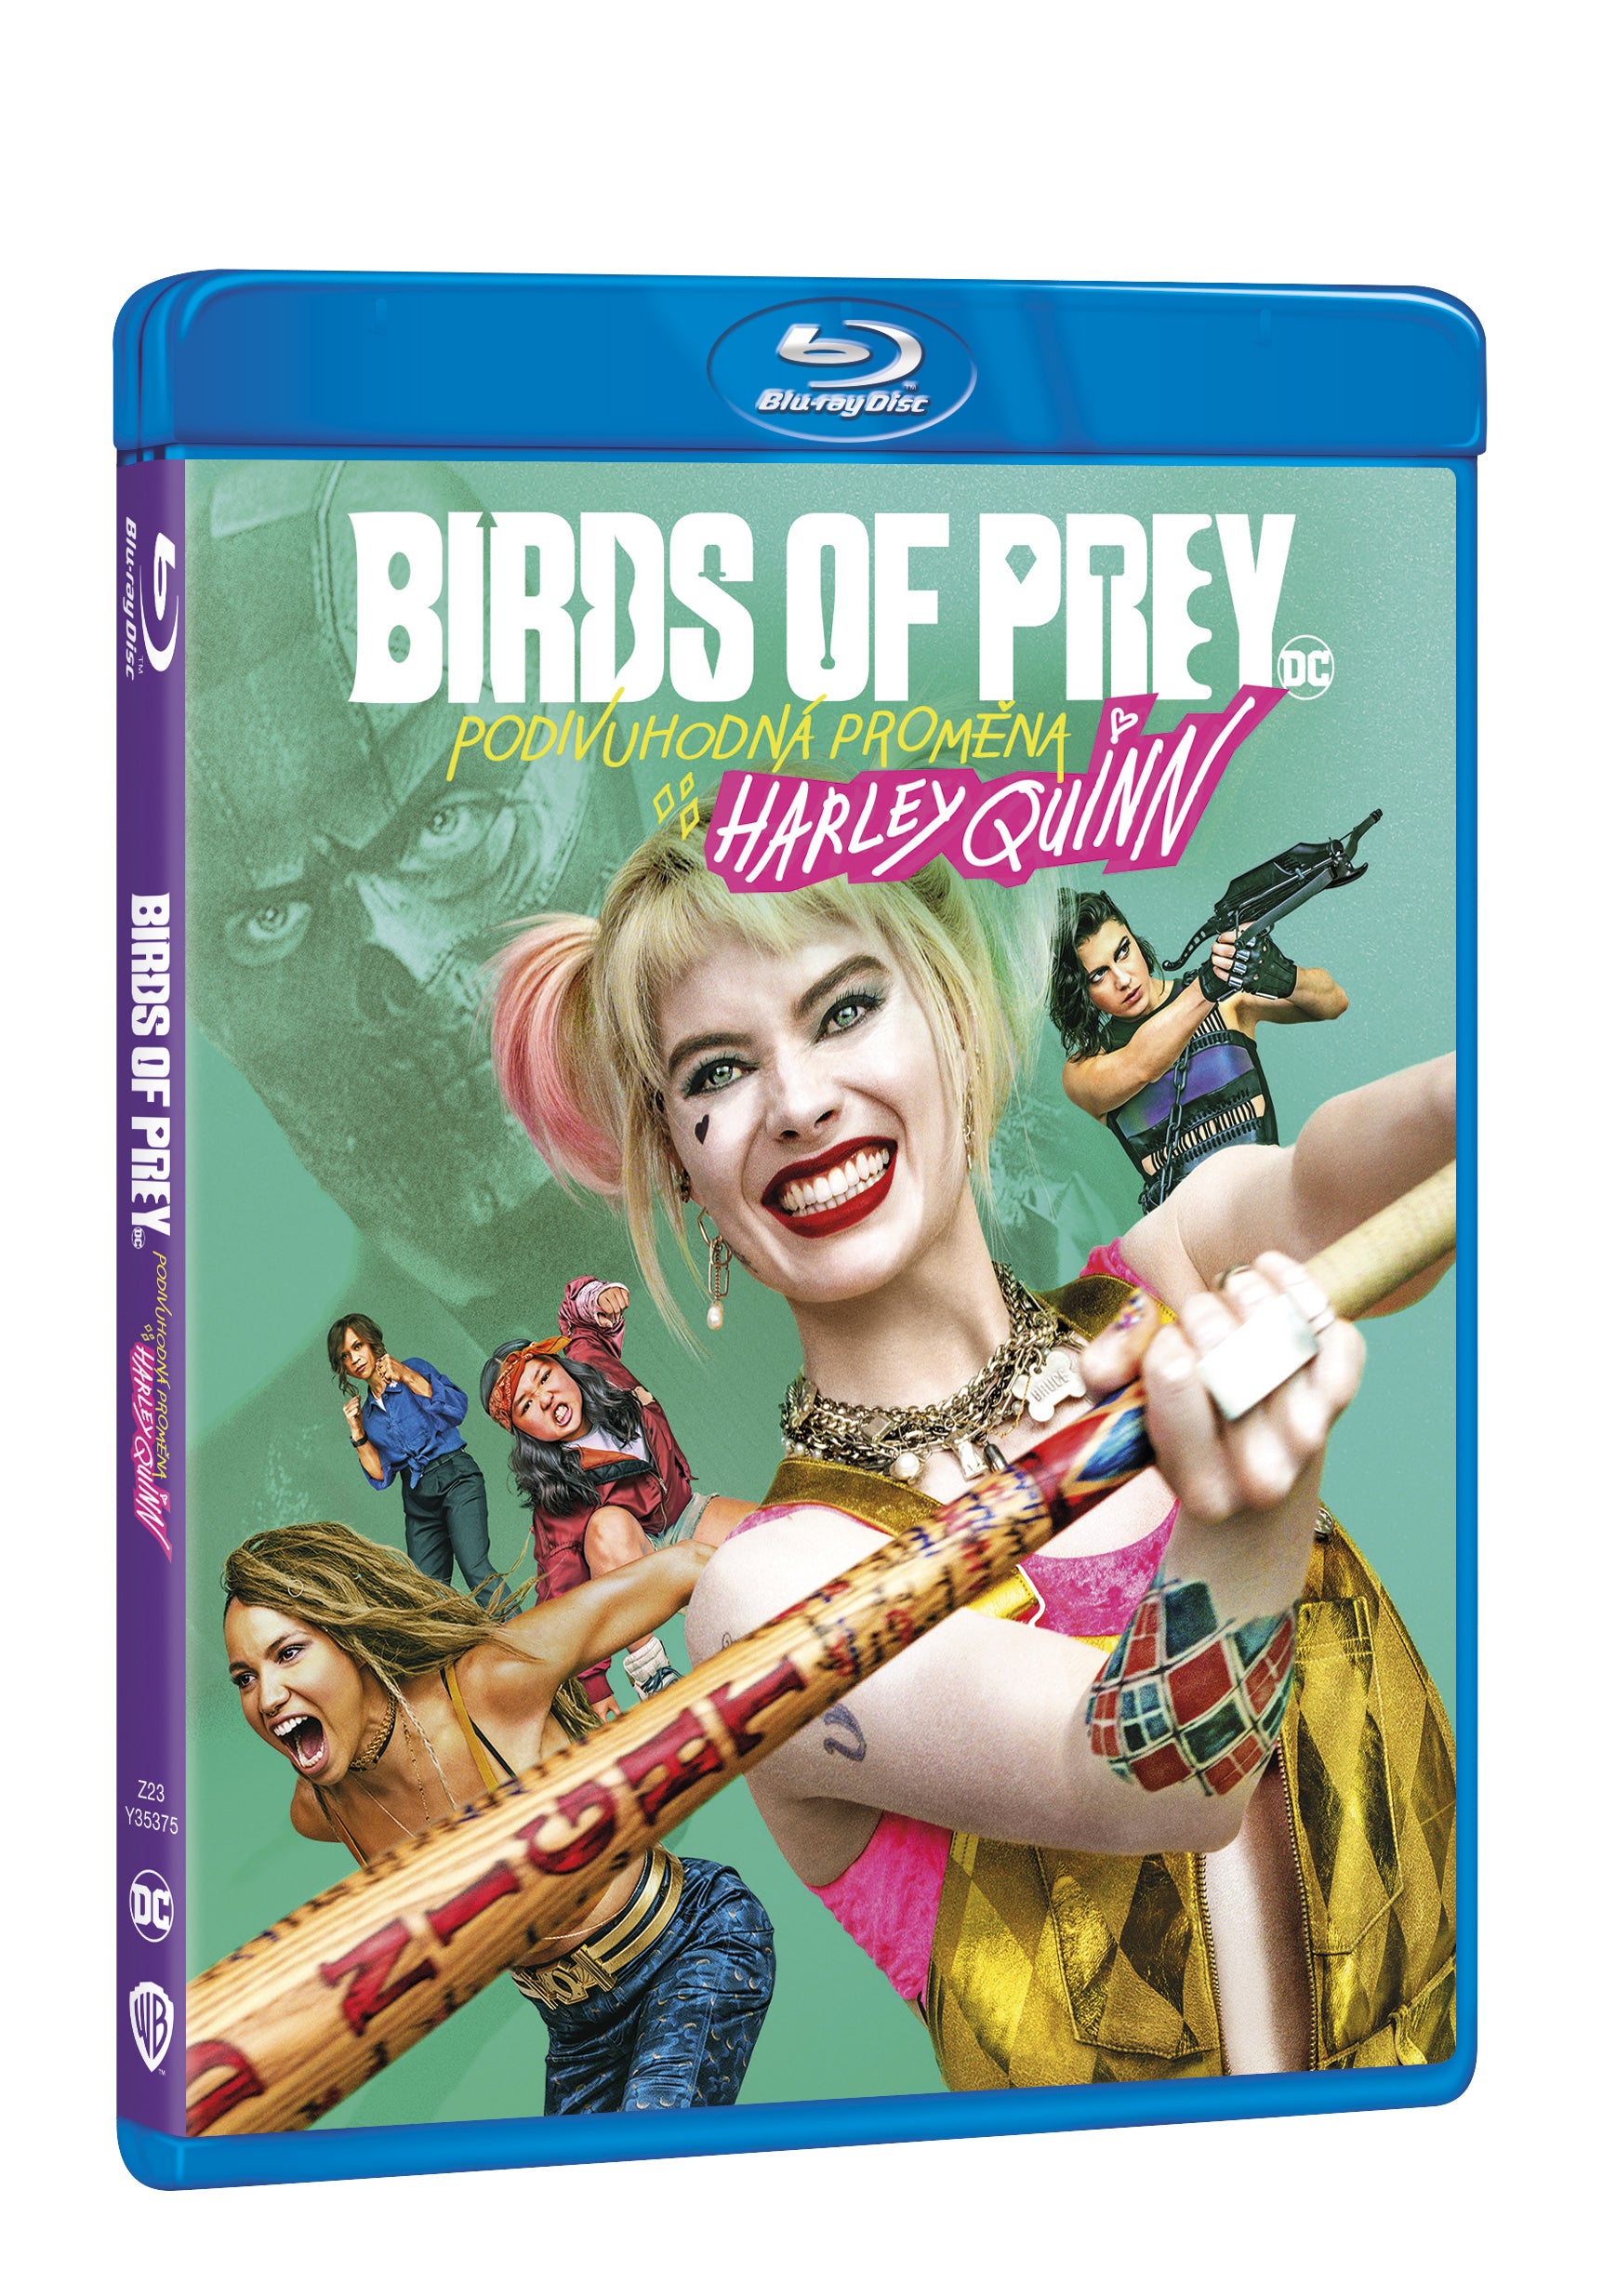 Birds of Prey (Podivuhodna promena Harley Quinn) BD / Birds of Prey (And the Fantabulous Emancipation of One Harley Quinn) - Czech version